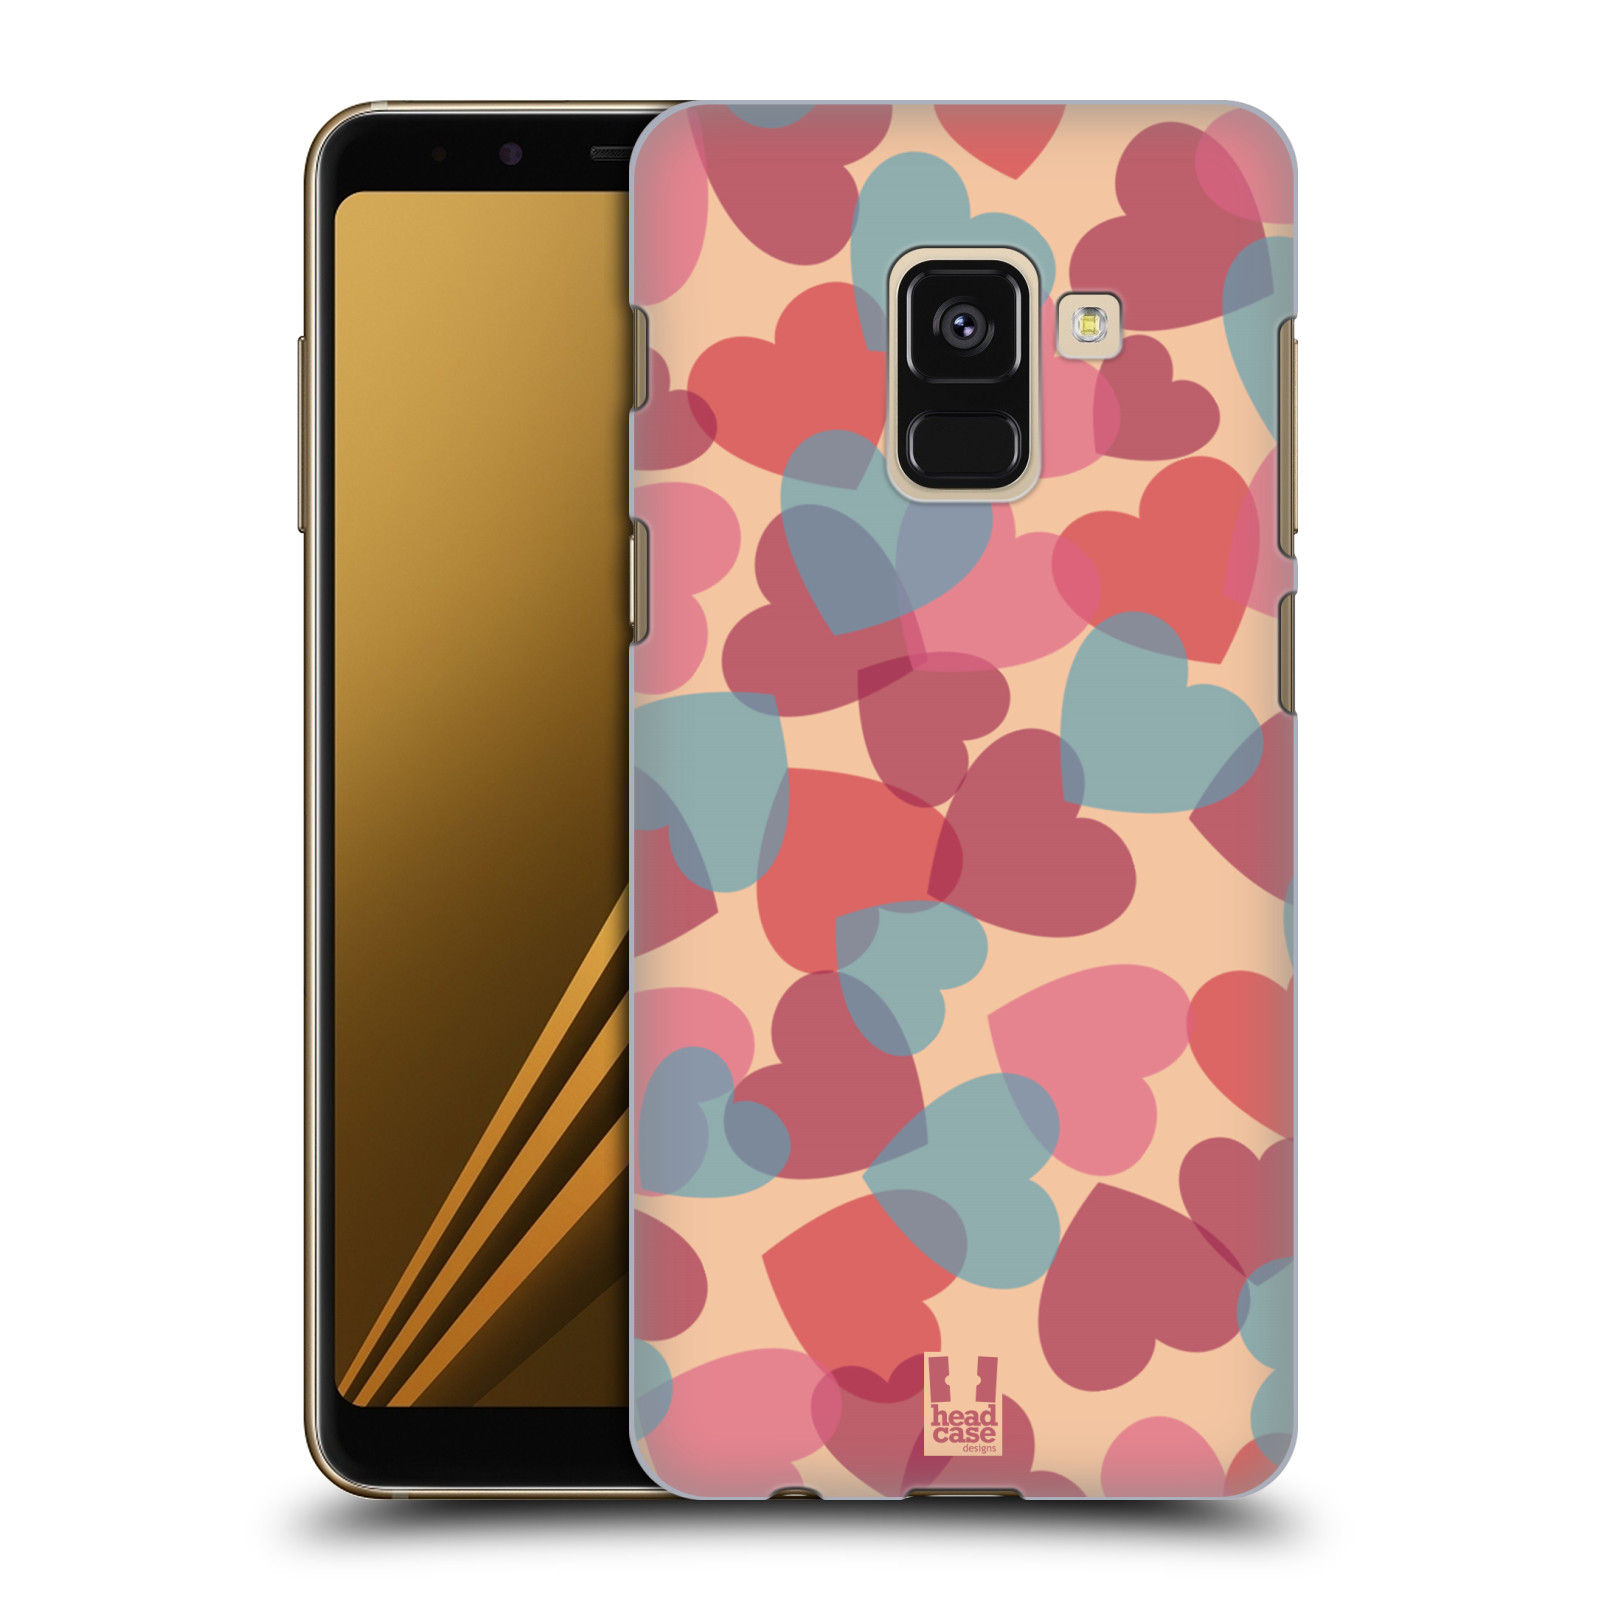 Zadní obal pro mobil Samsung Galaxy A8+ - HEAD CASE - Růžová srdíčka kreslený vzor